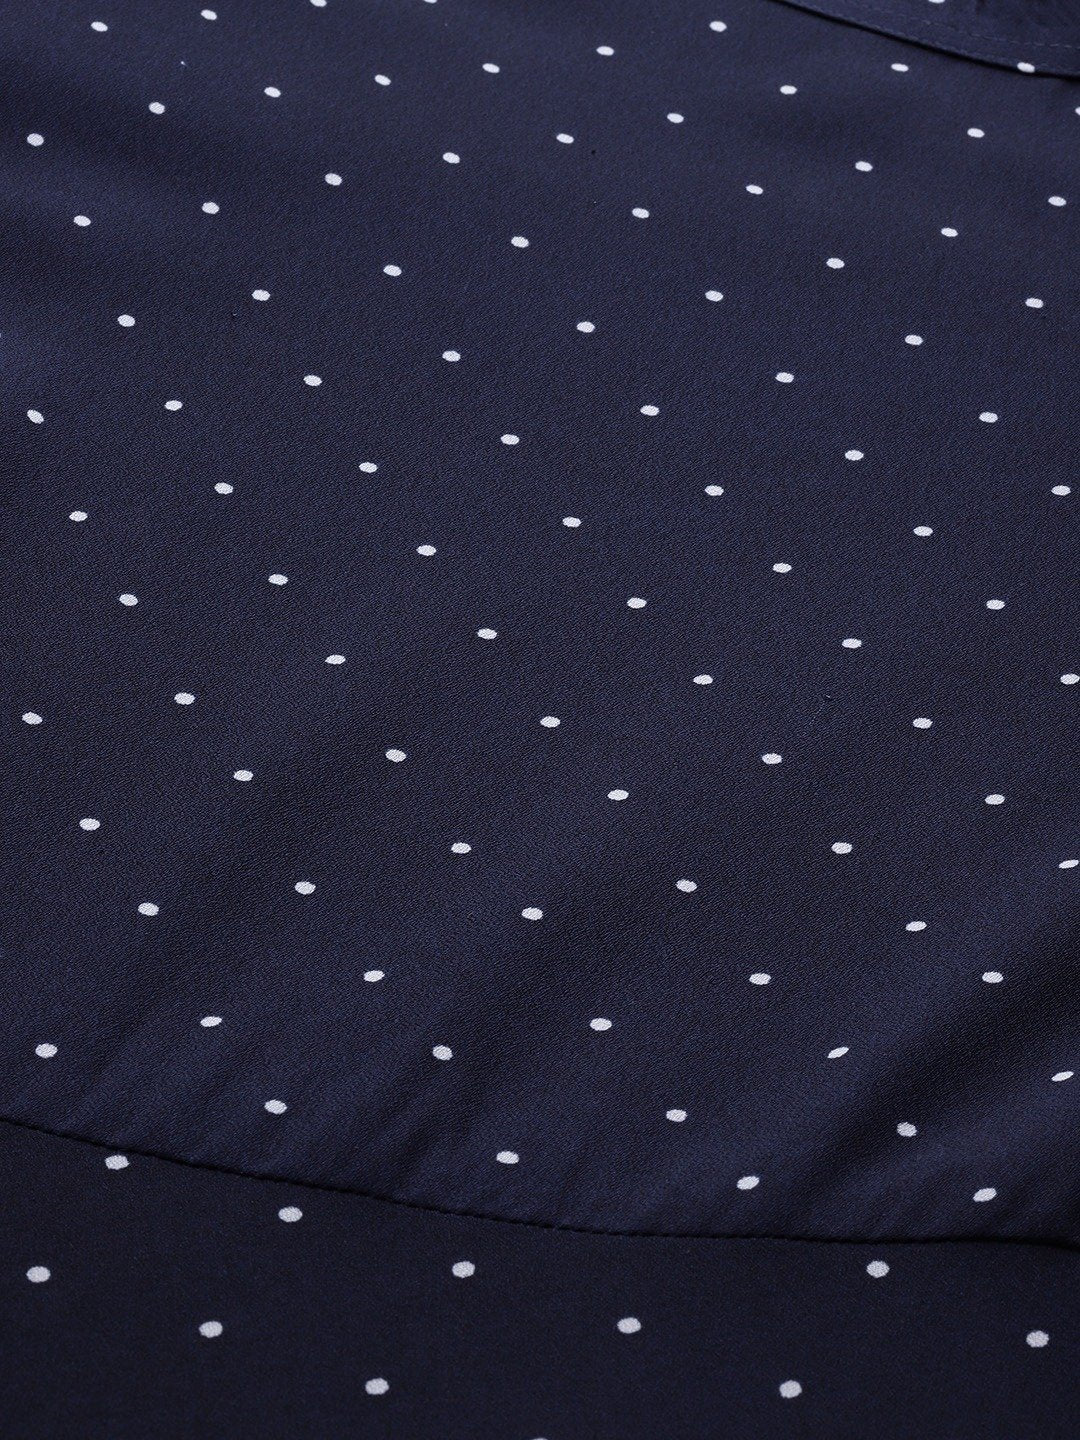 Women's Navy Blue & White Polka Dots Print Bell Sleeves Anarkali Kurta - Jompers